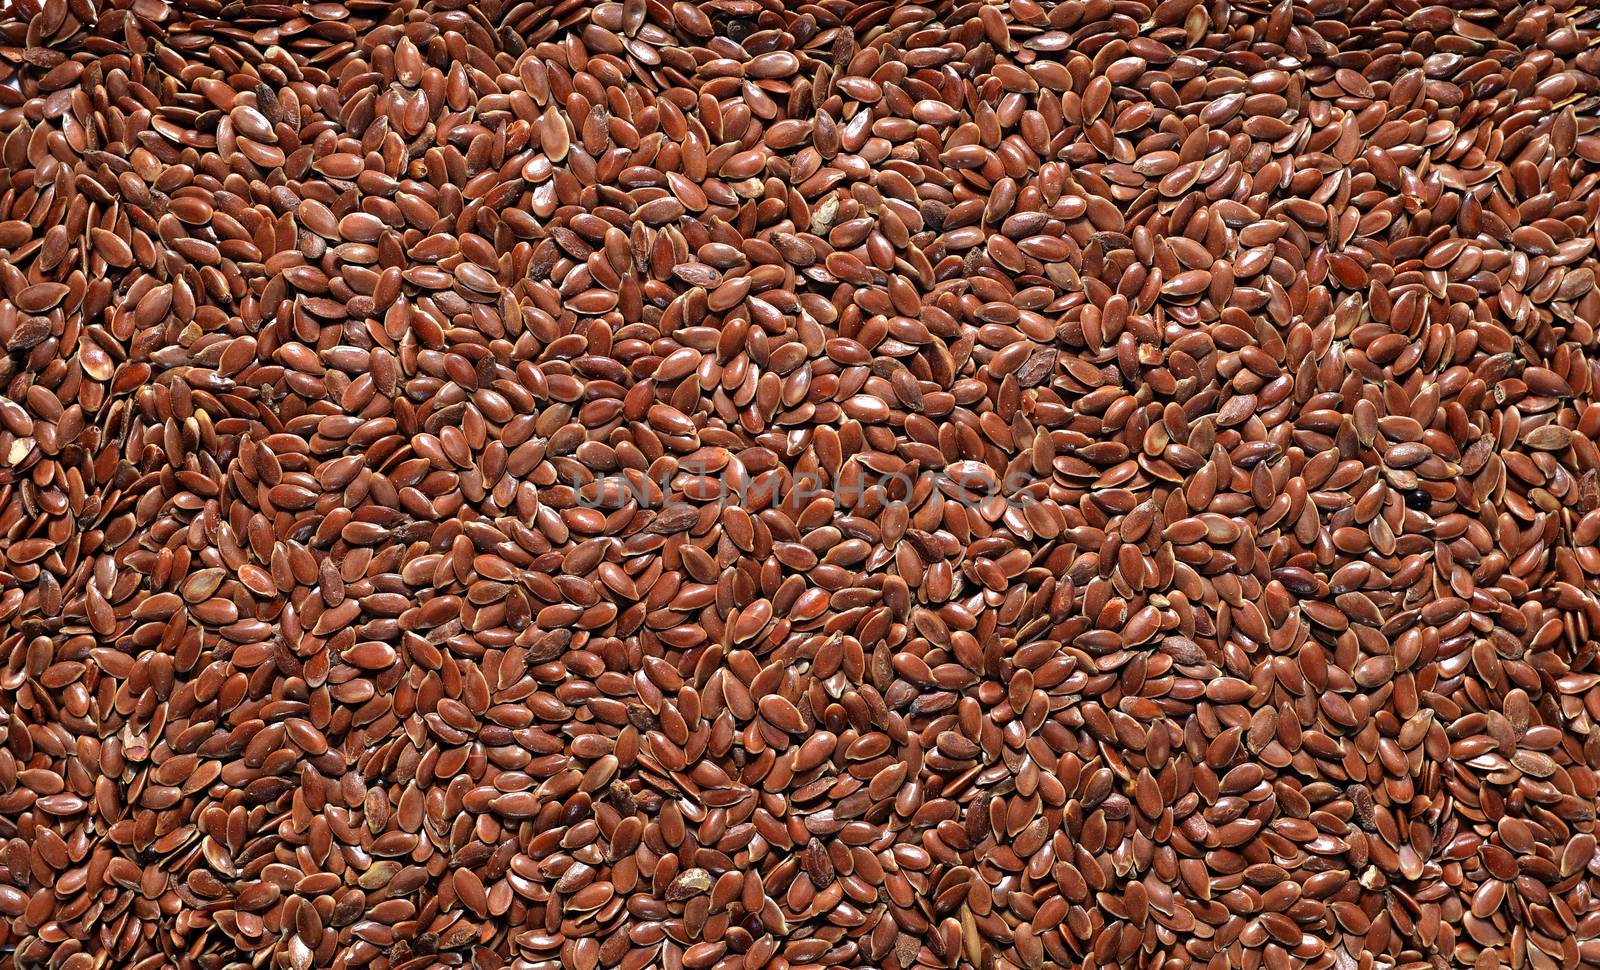 Flax seed texture by tony4urban